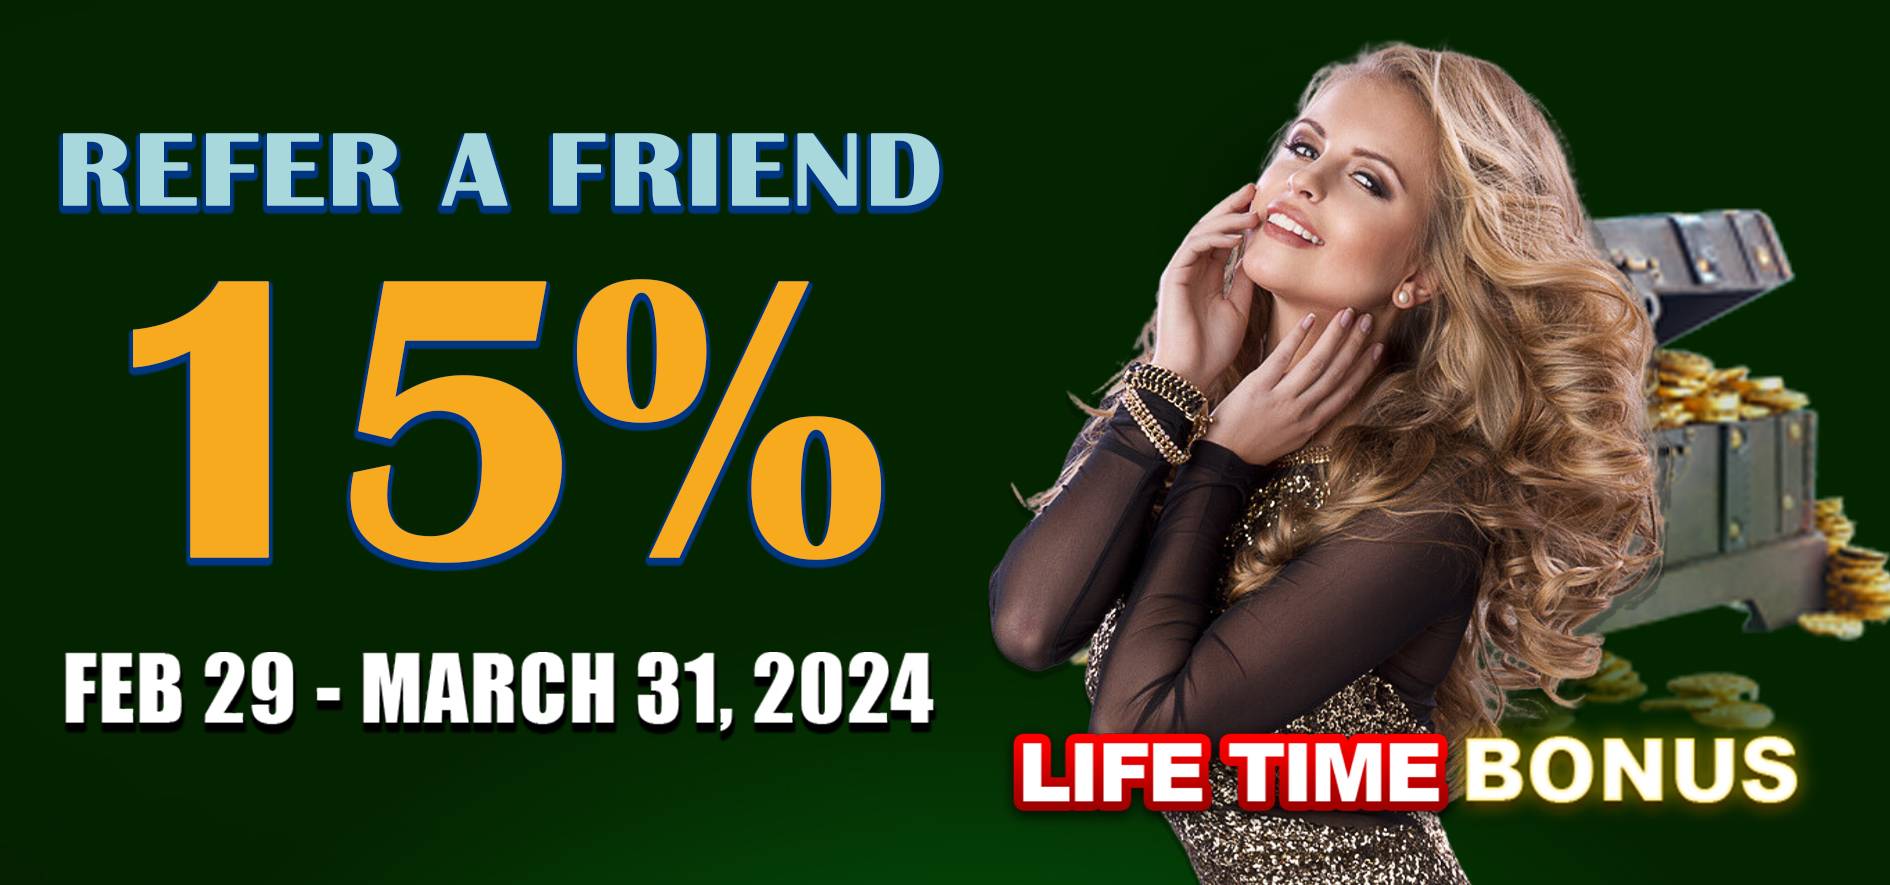 REFER A FRIEND 15% BJAFF PROMOTION BD